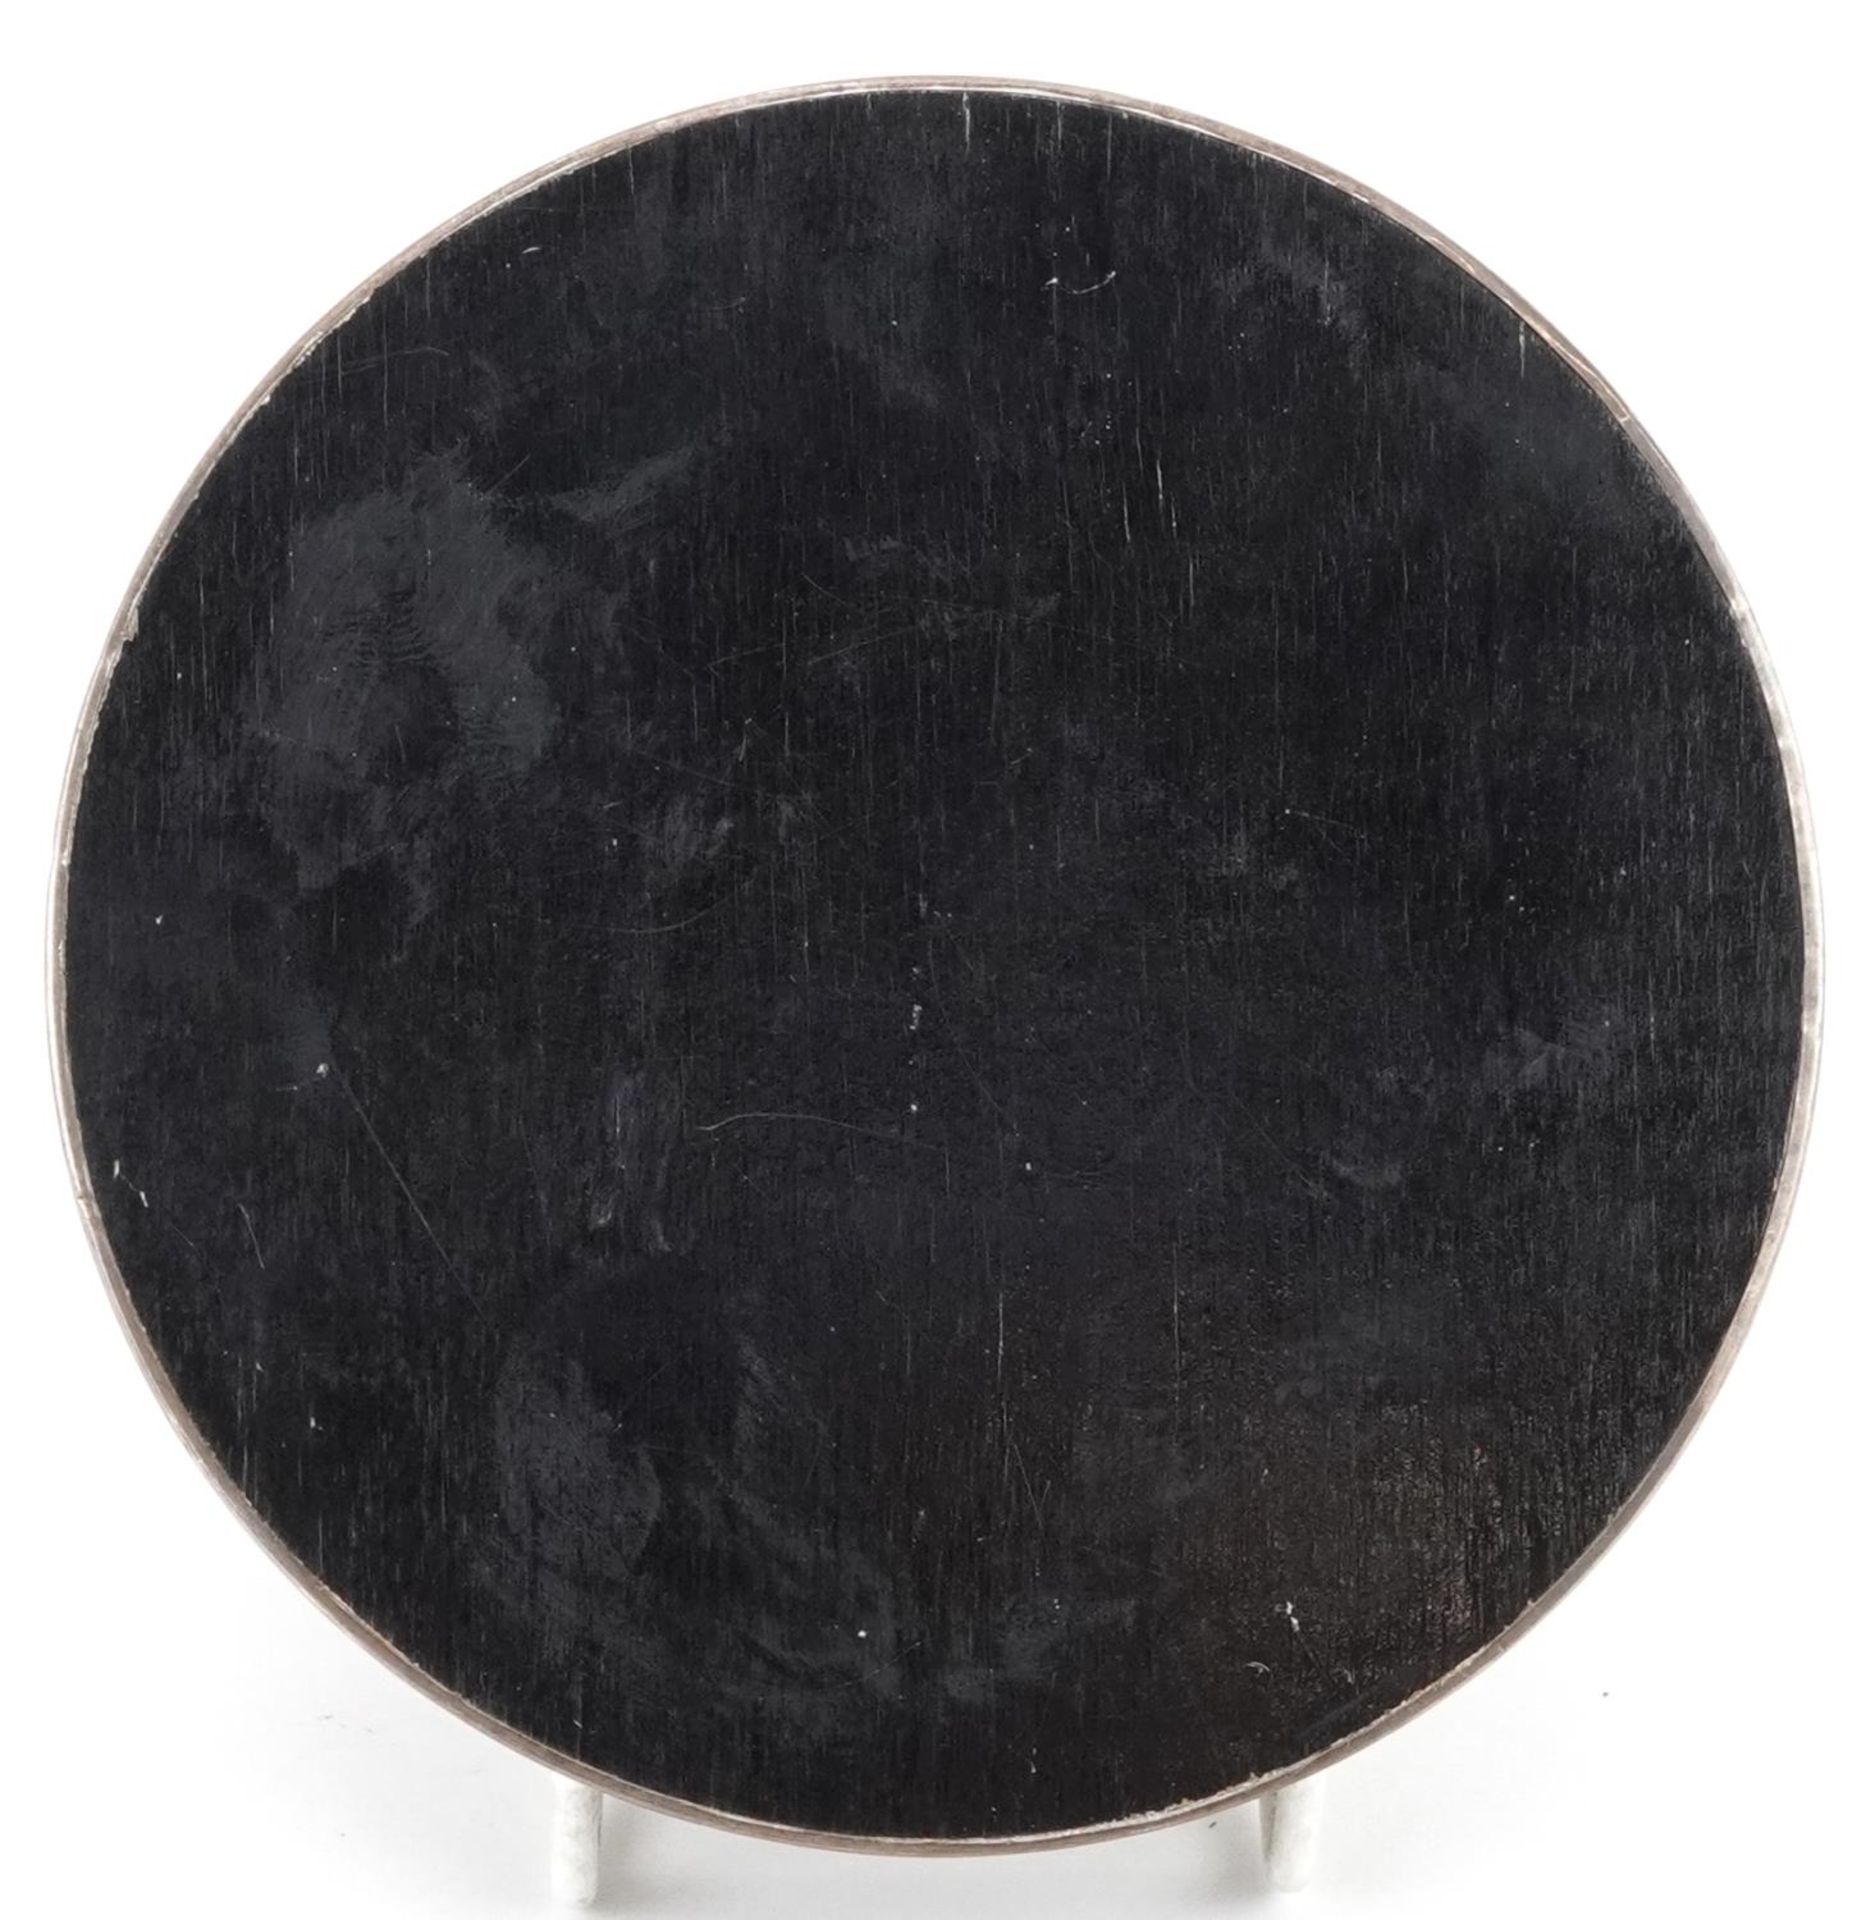 Sanders & Mackenzie, Elizabeth II circular silver and ebony ashtray, Birmingham 1958, 12.2cm in - Image 4 of 5